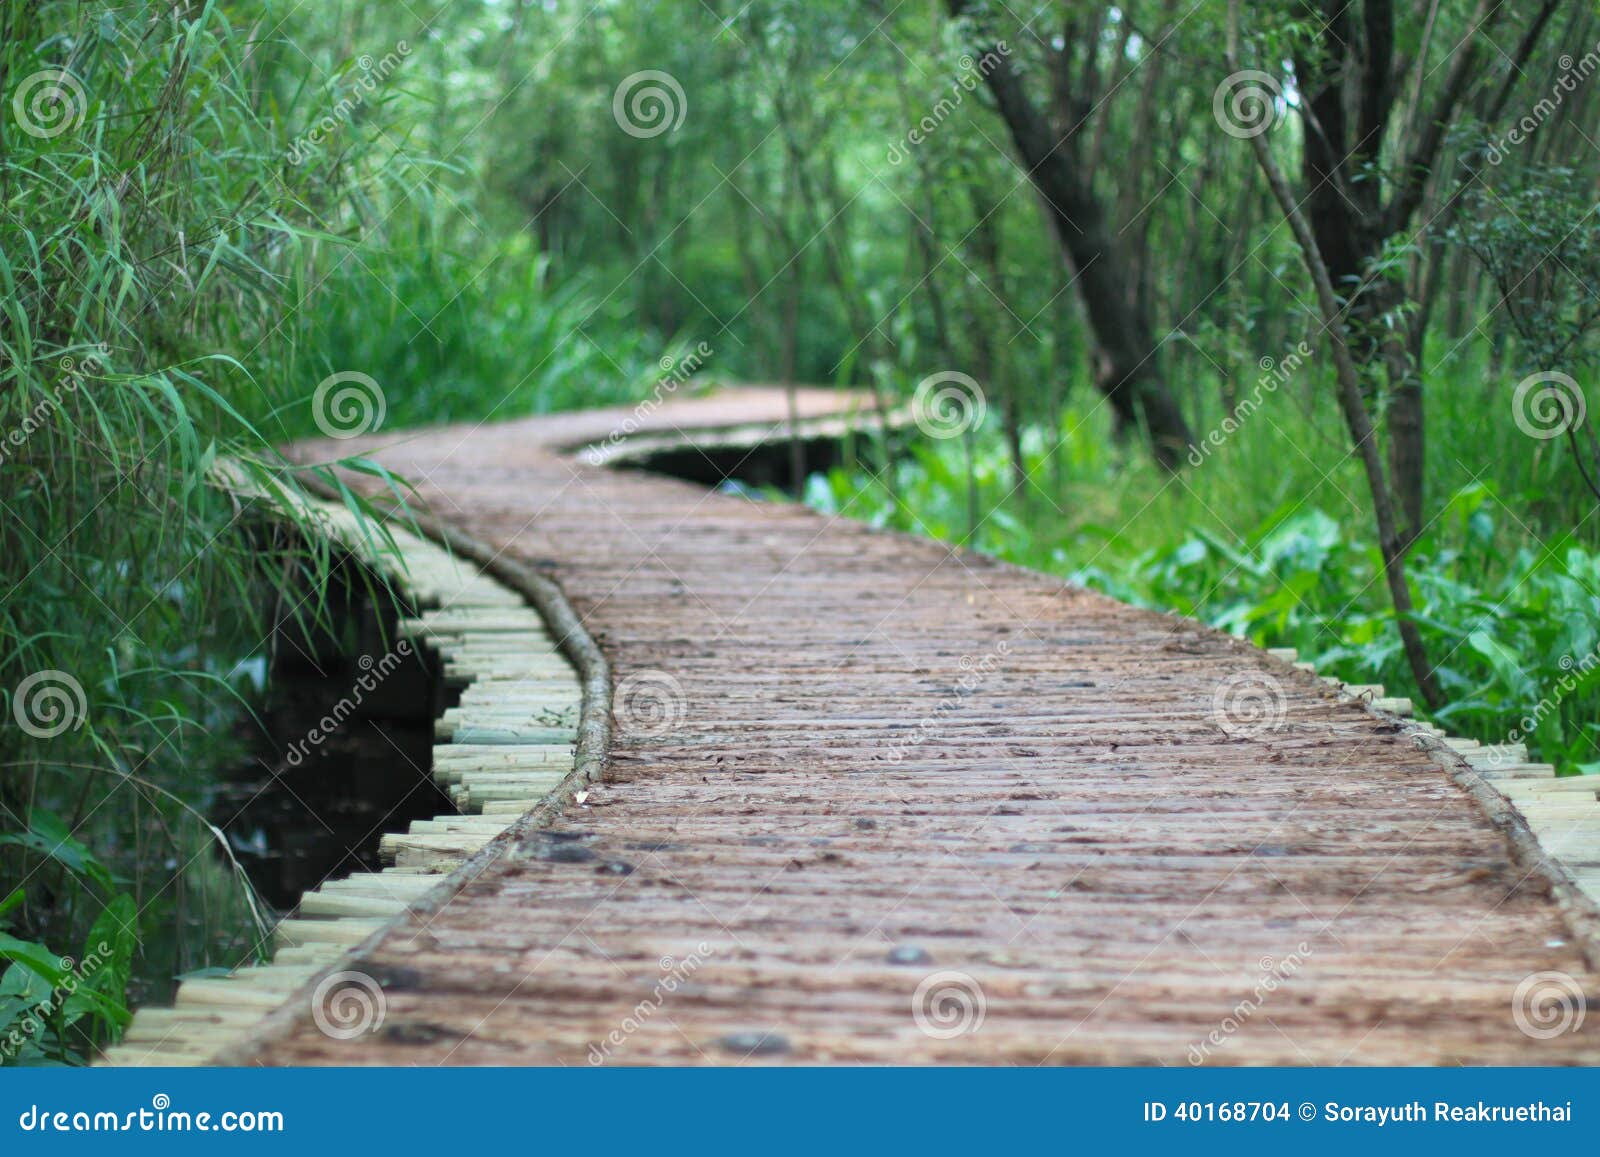 The wood bridge at xixi wetland hangzhou china